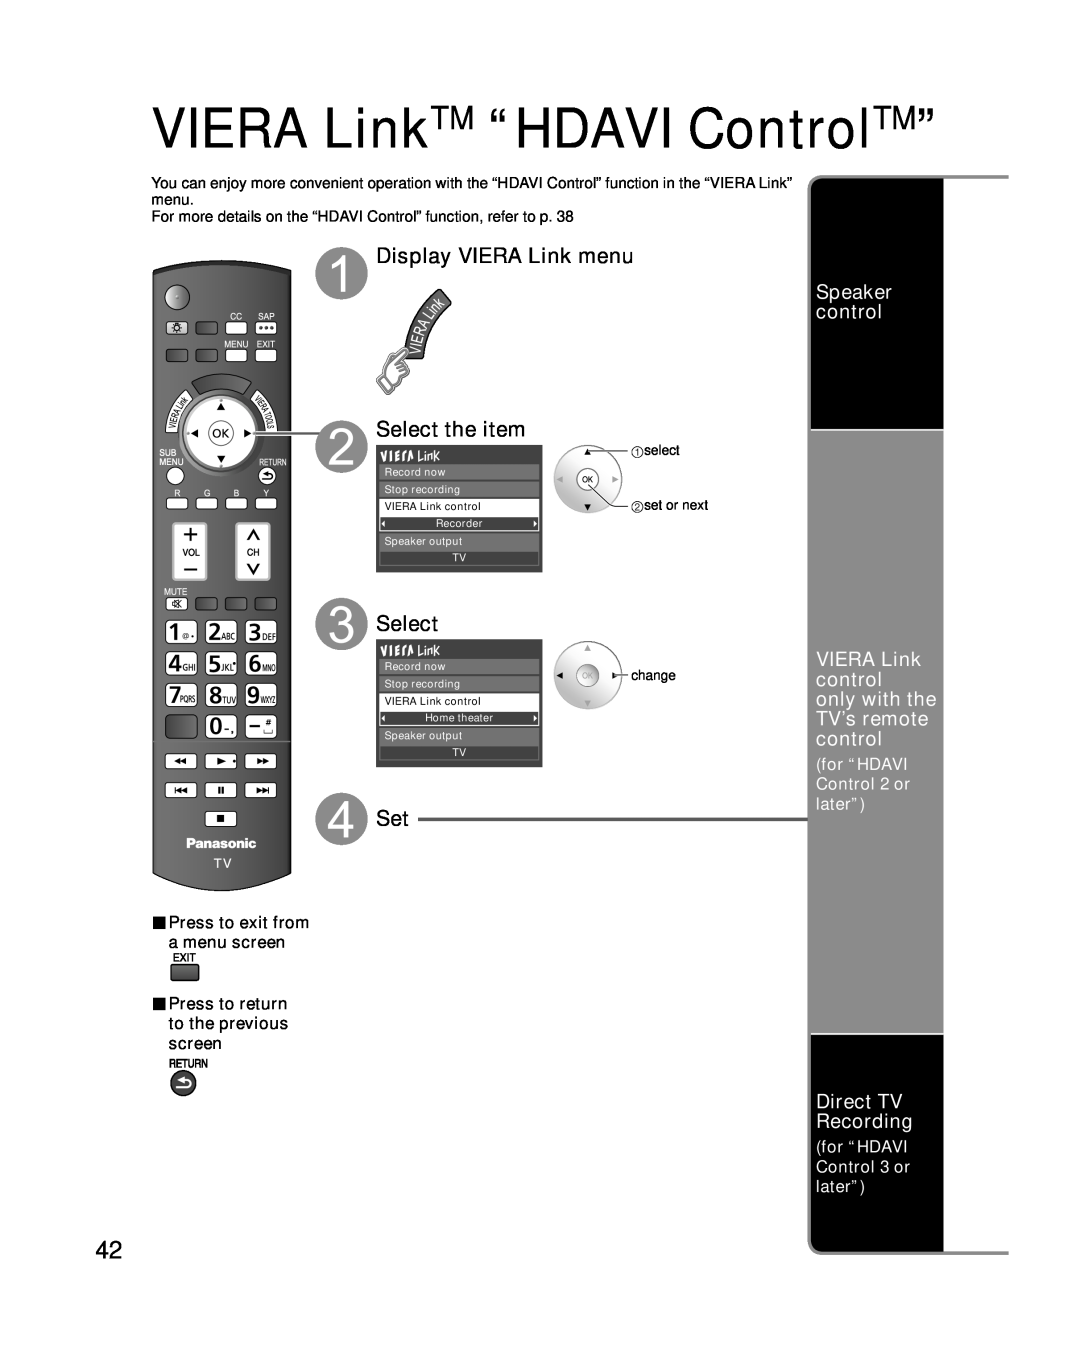 Panasonic TC-P50G10, TC-P46G10, TC-P54G10 Display VIERA Link menu Select the item, Speaker control, Direct TV Recording 